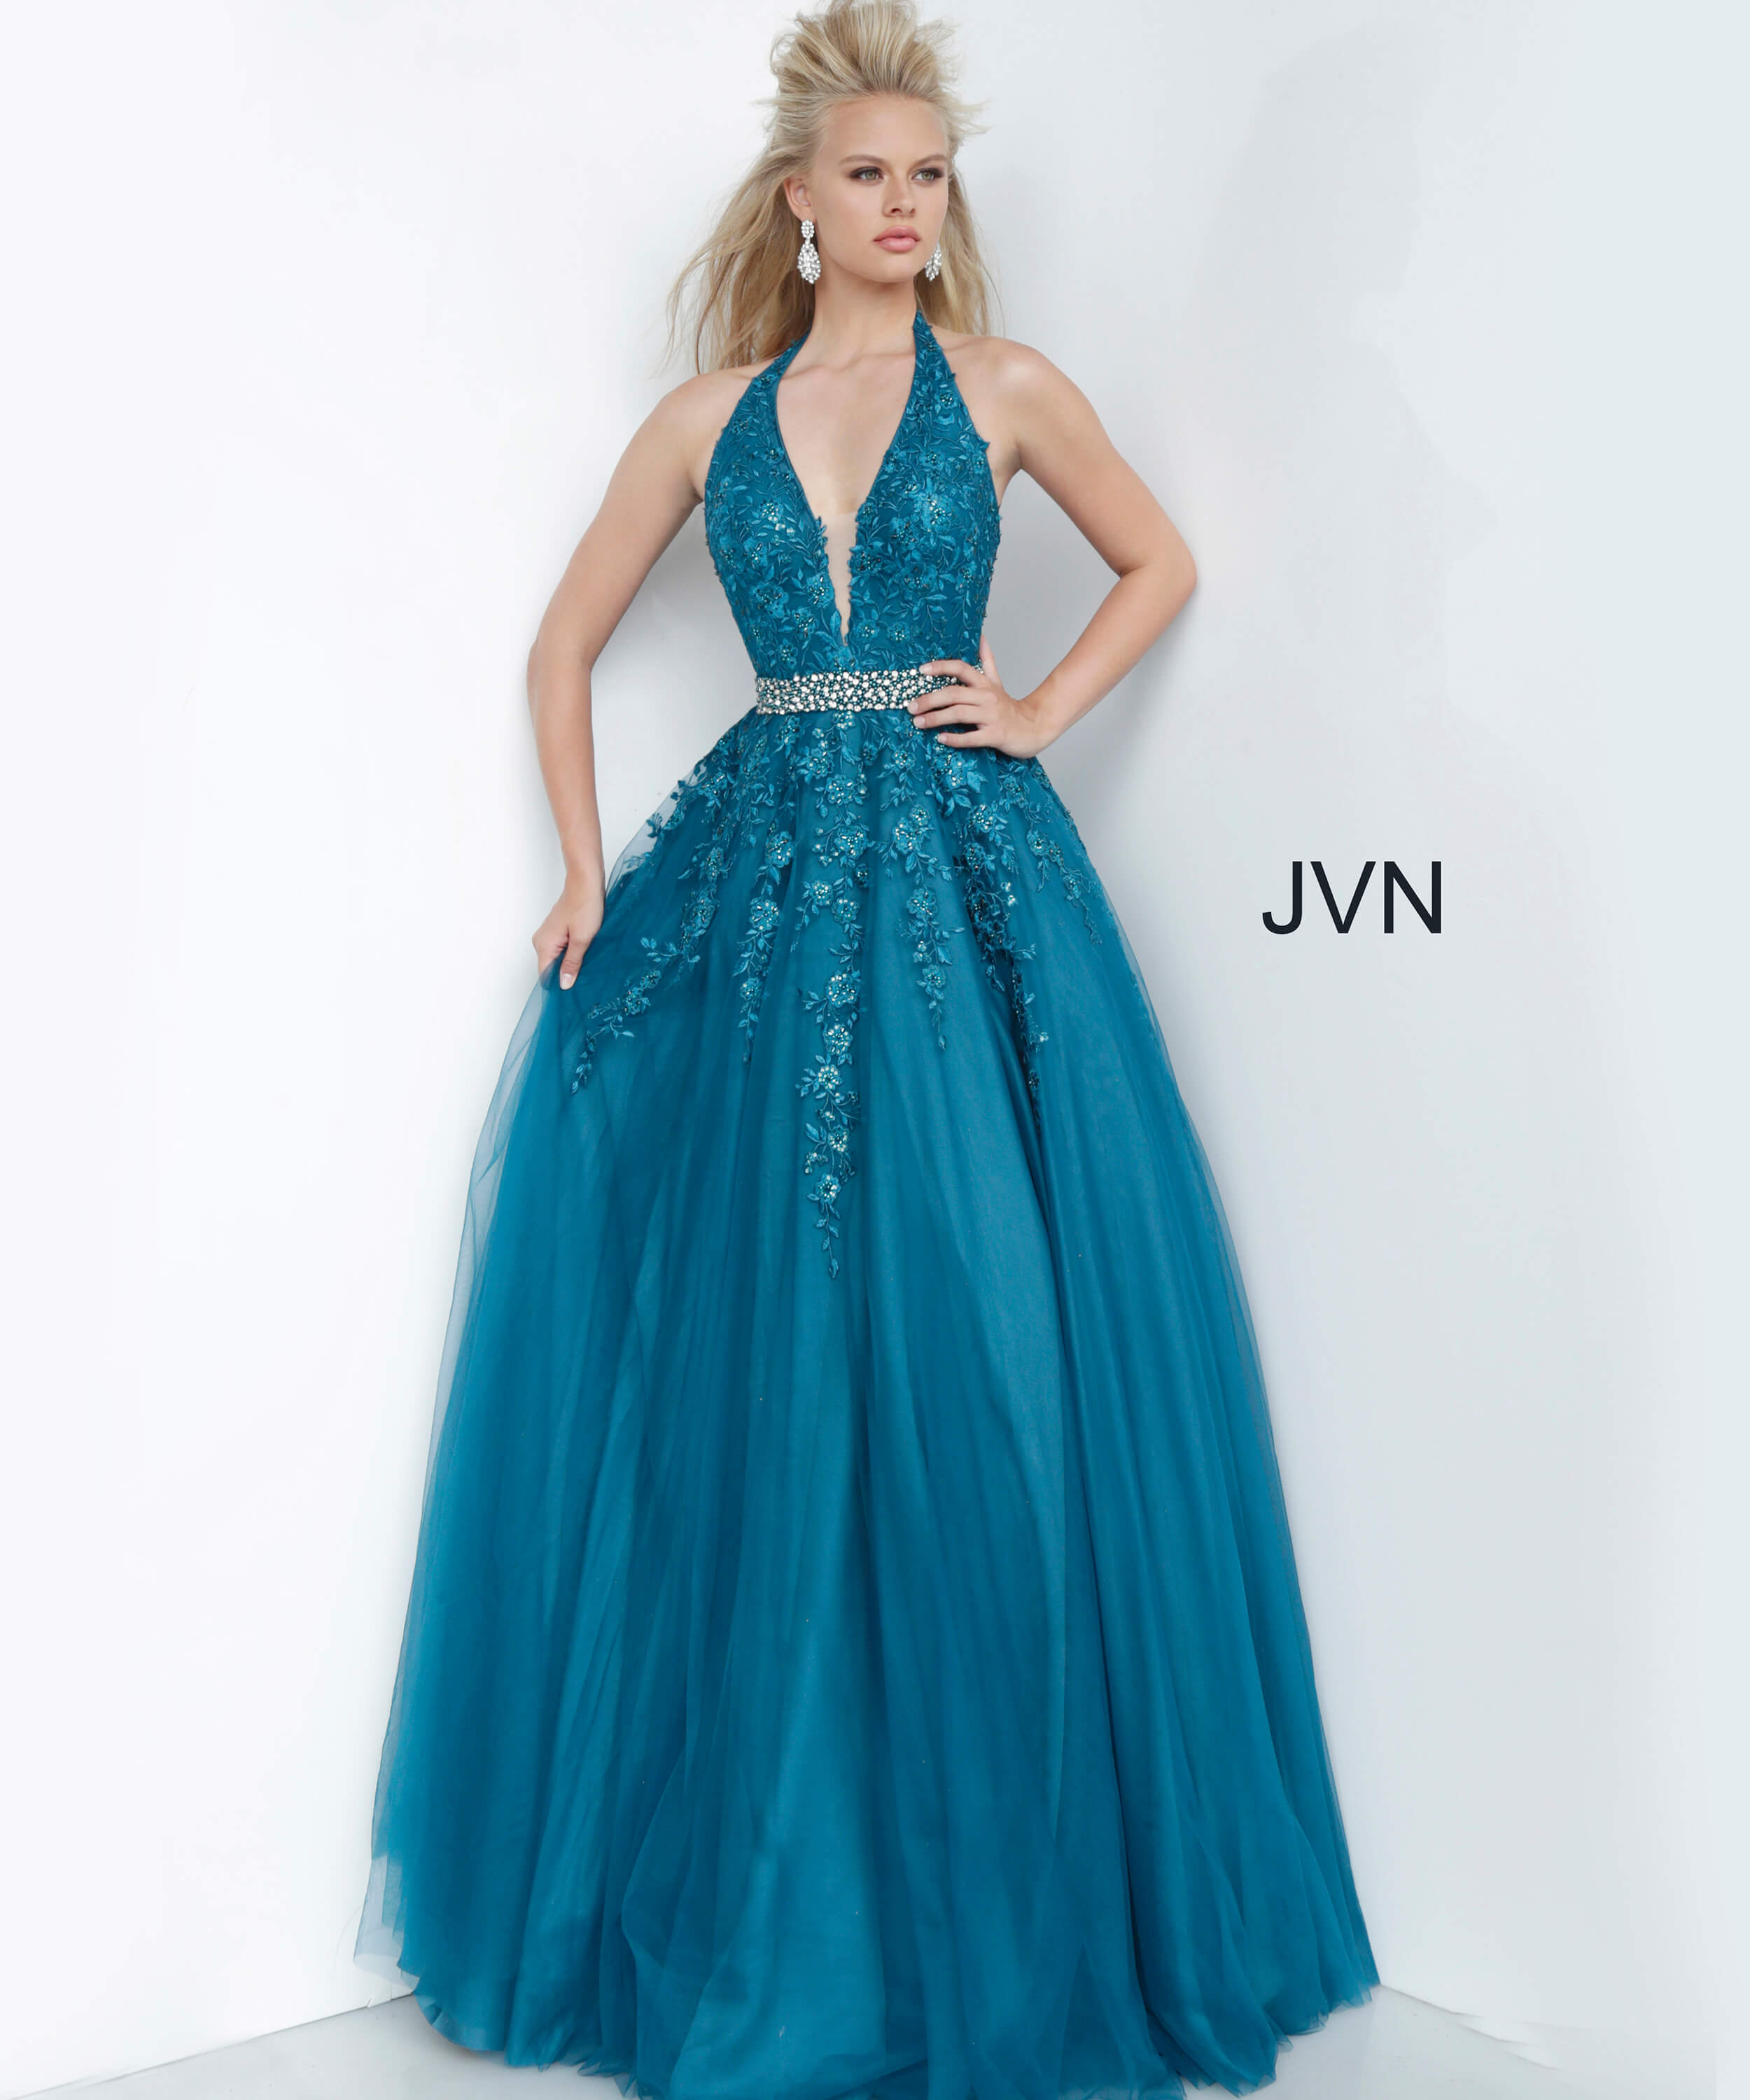 JVN00923 Dress JVN Teal Halter Neckline Embroidered Prom Ballgown